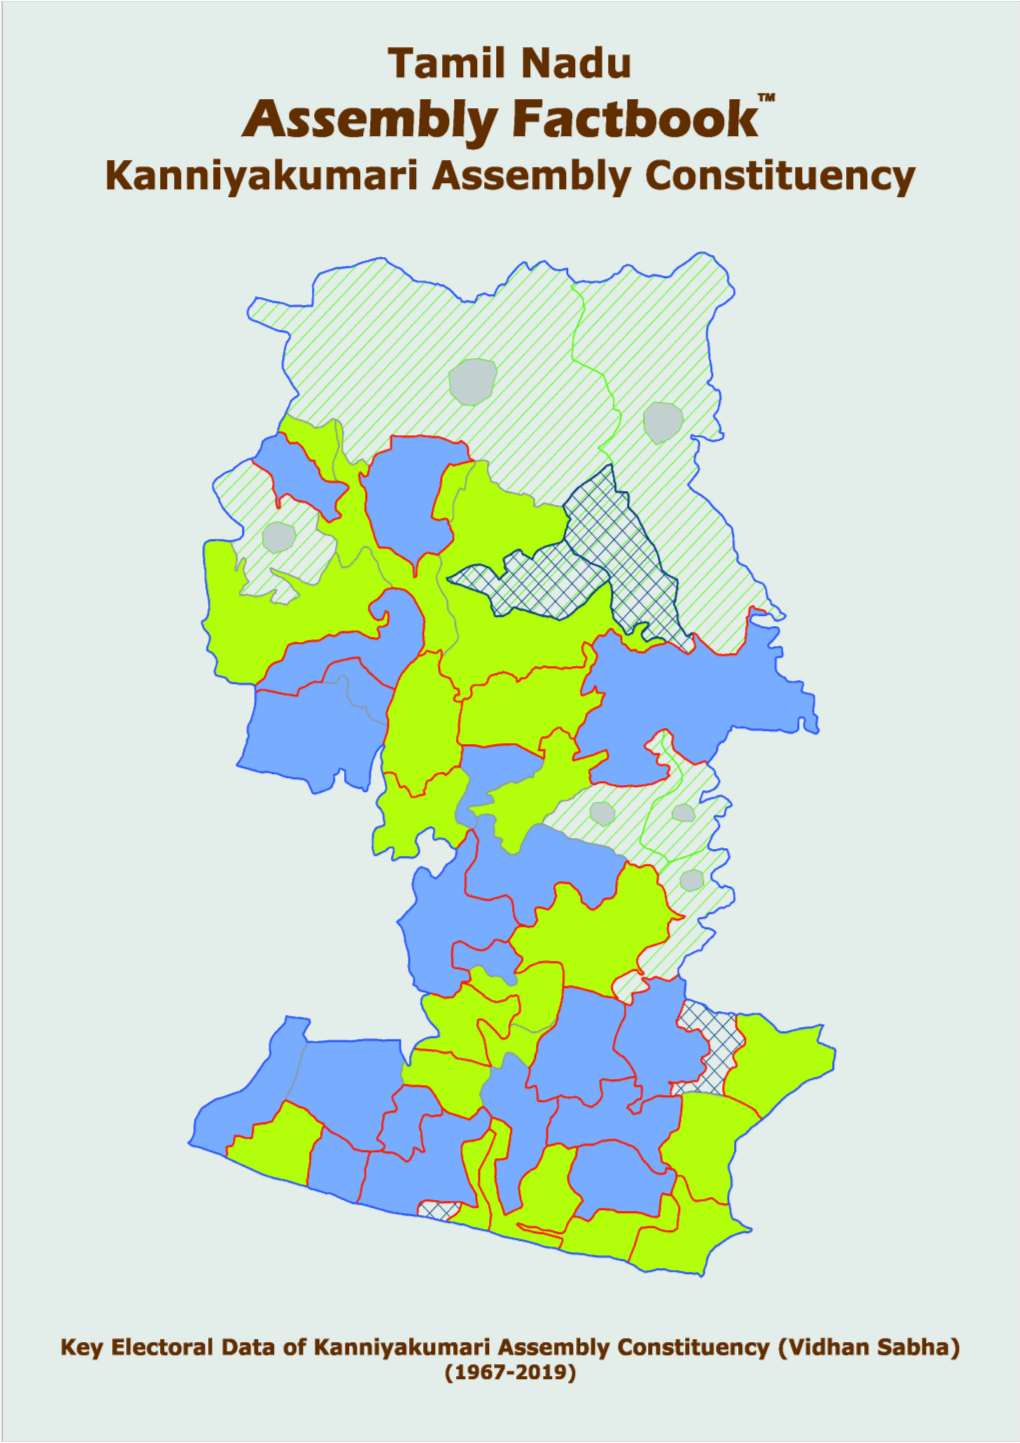 Kanniyakumari Assembly Tamil Nadu Factbook